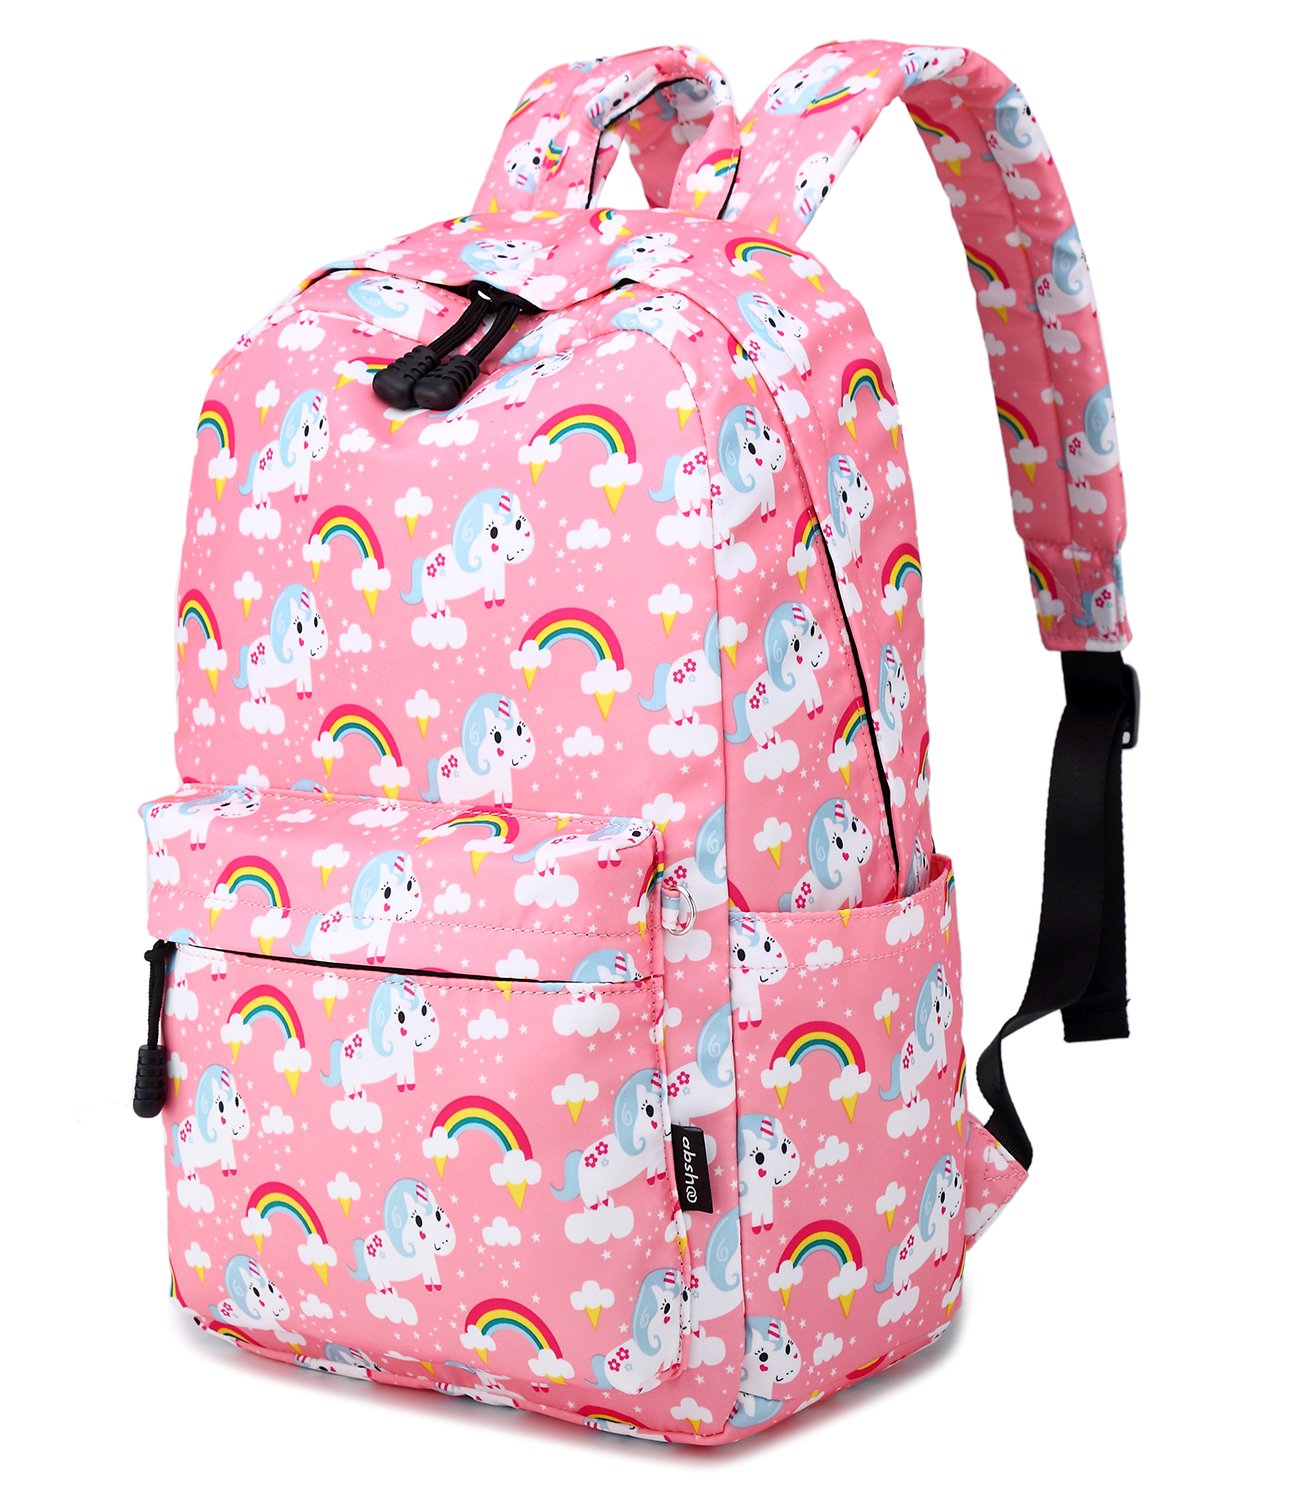 abshoo Cute Lightweight Kids School Bookbags Unicorn Girls Backpacks With Lunch Bag (Unicorn Pink Set)